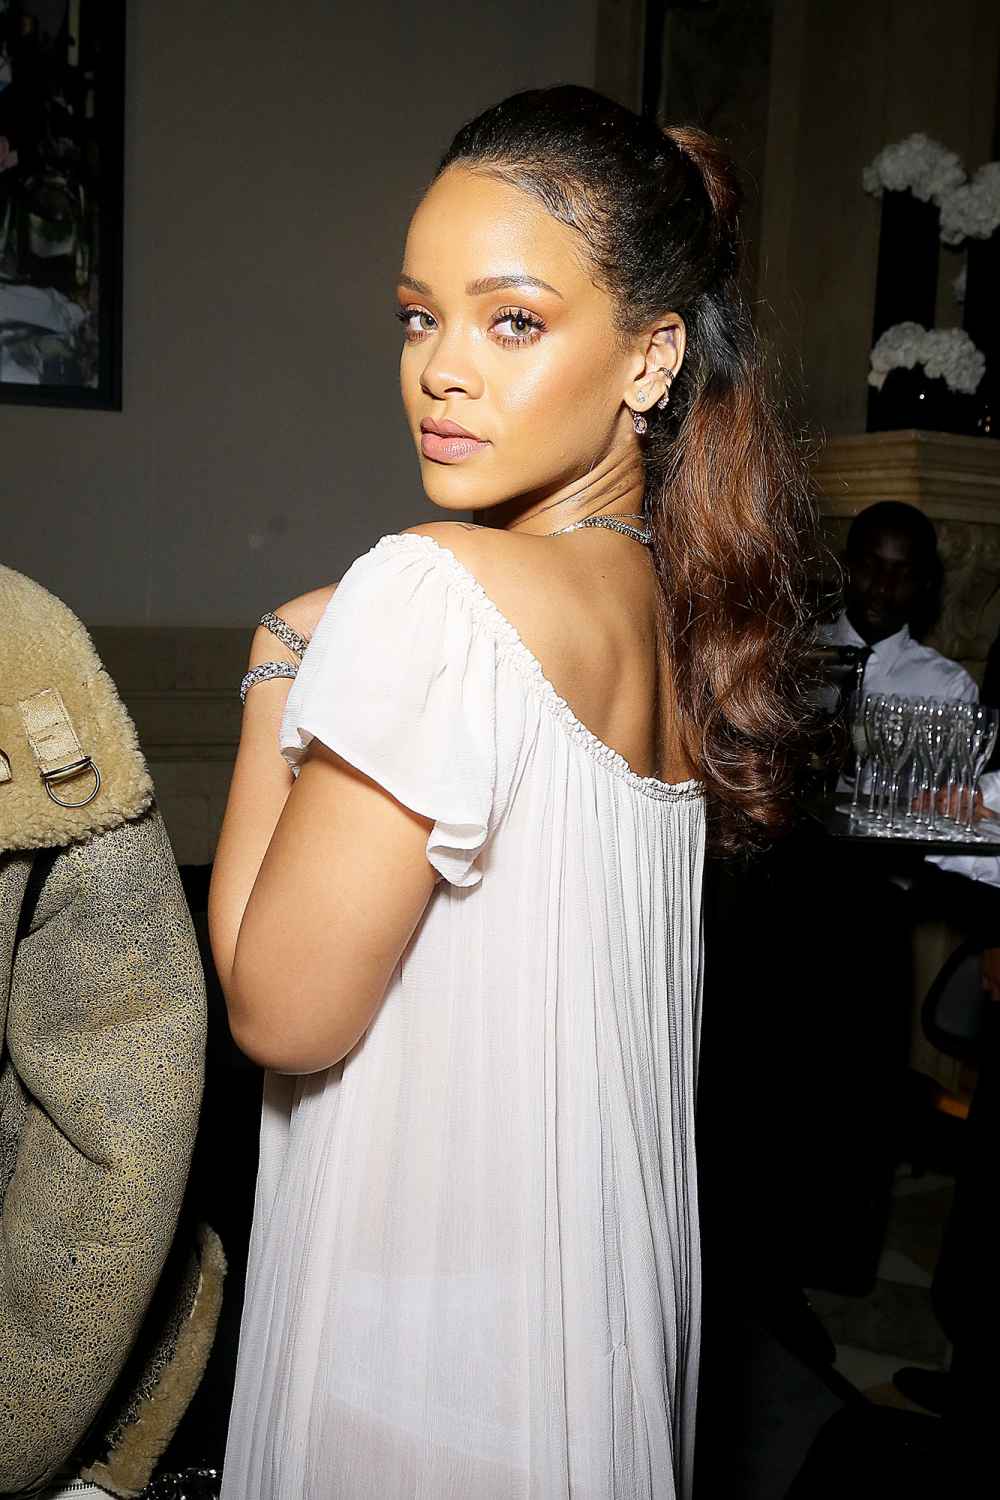 Rihanna¹s Everyday Makeup Tutorial Is Full of Secrets